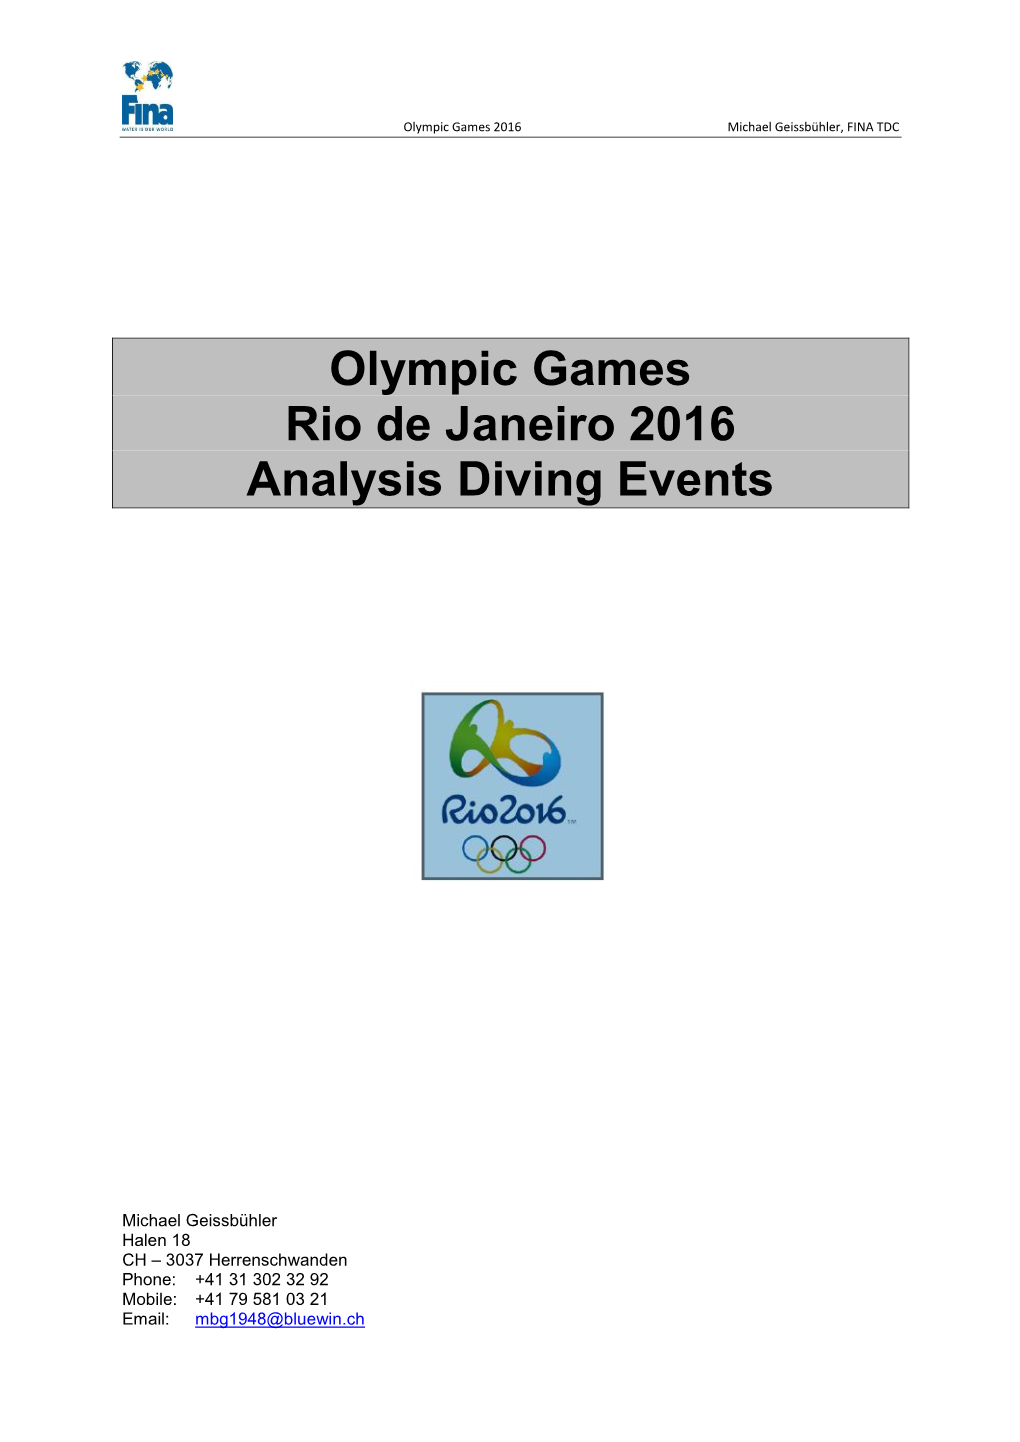 Olympic Games Rio De Janeiro 2016 Analysis Diving Events